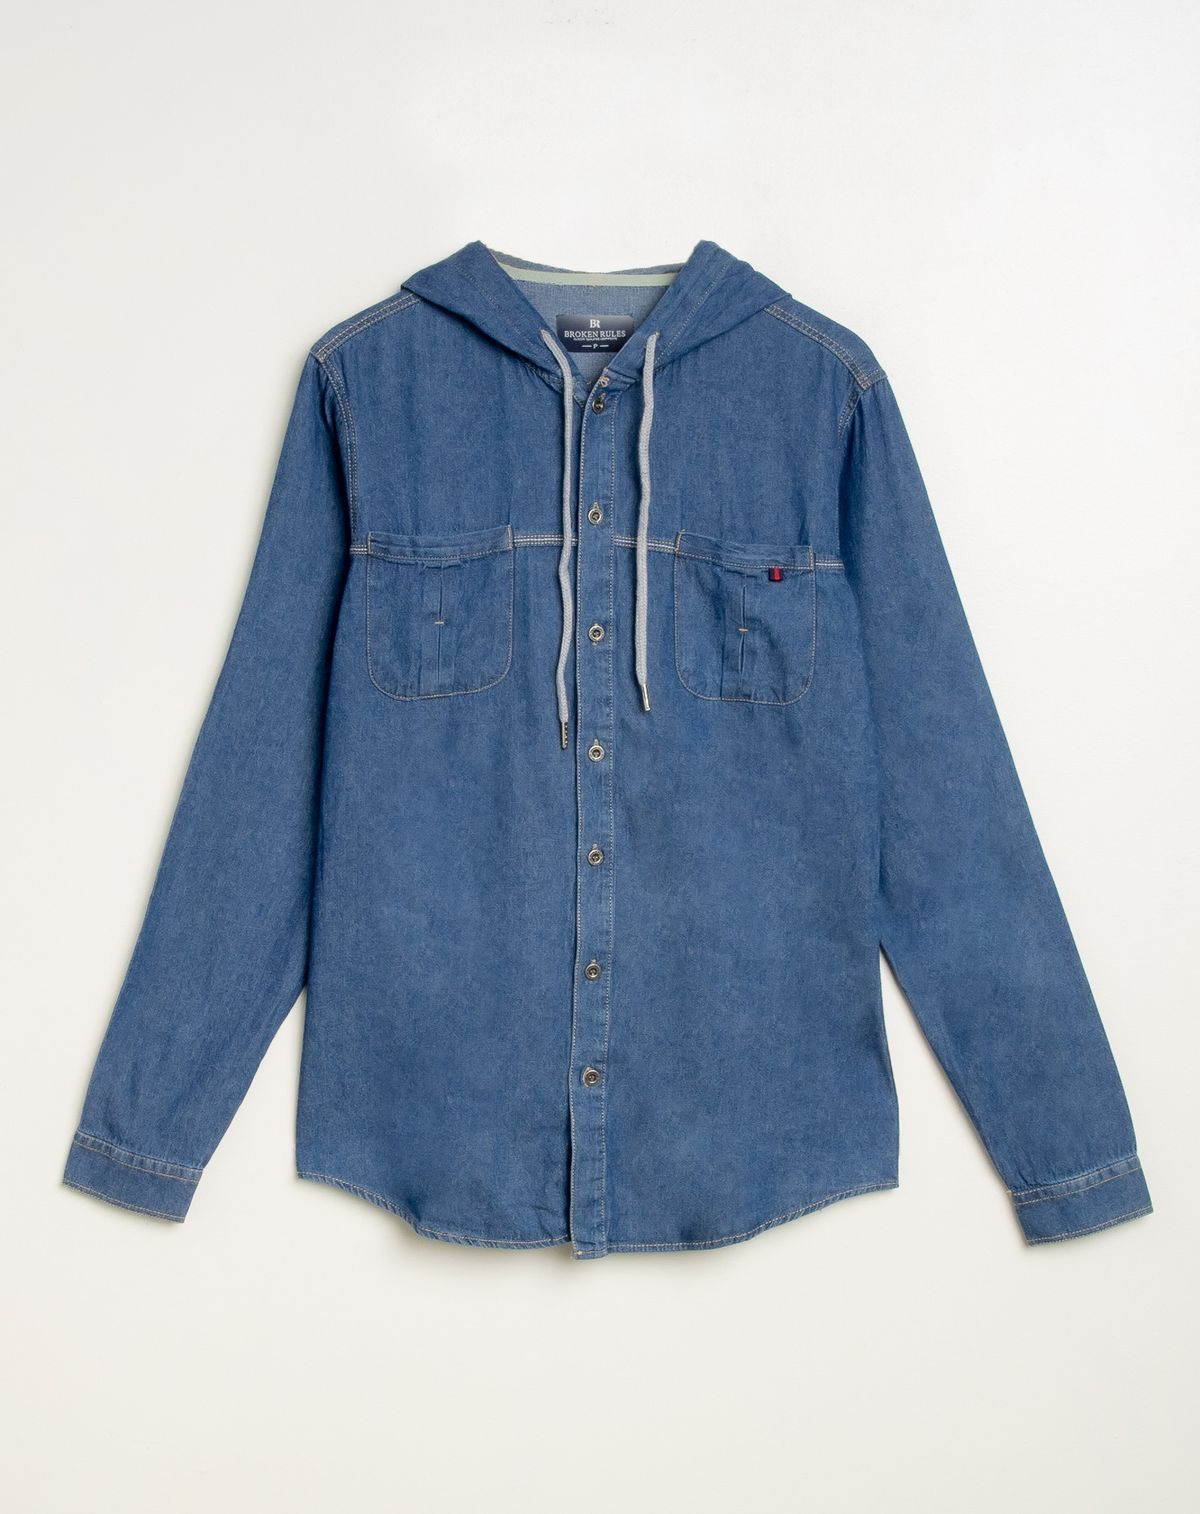 633514004-camisa-jeans-manga-longa-masculina-capuz-azul-gg-b79